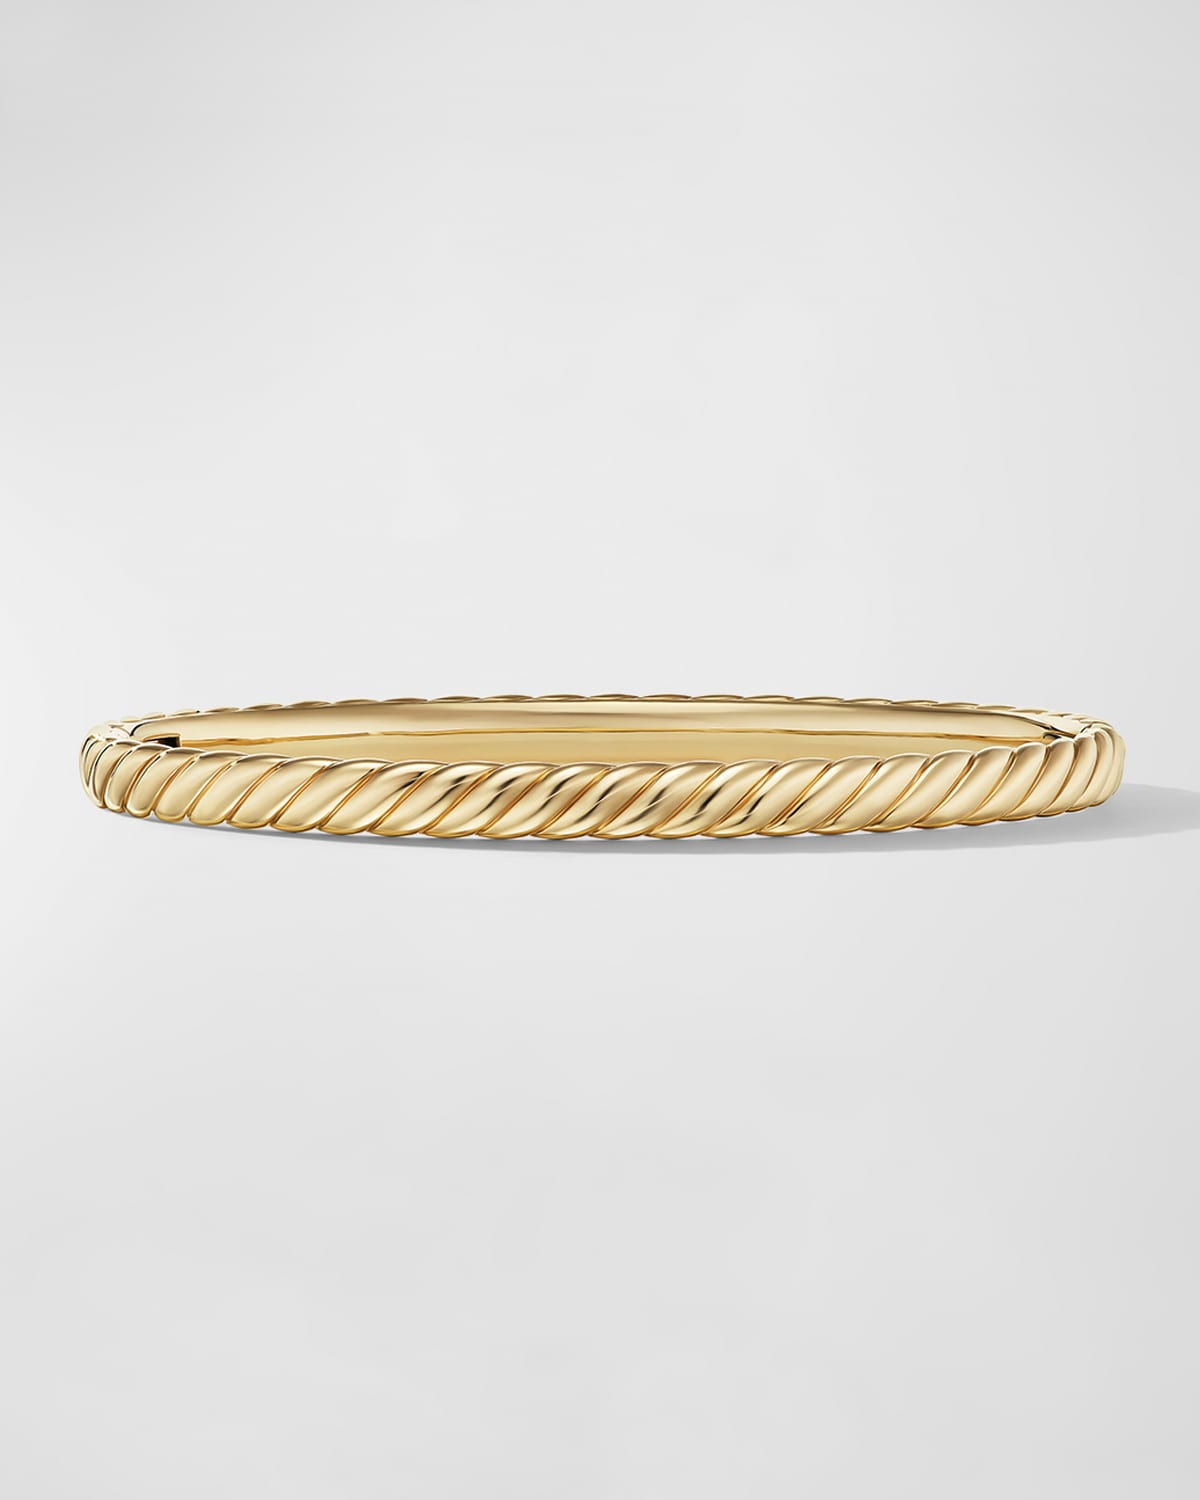 David Yurman Sculpted Cable Bracelet in 18K Gold, 4.5mm, Size S